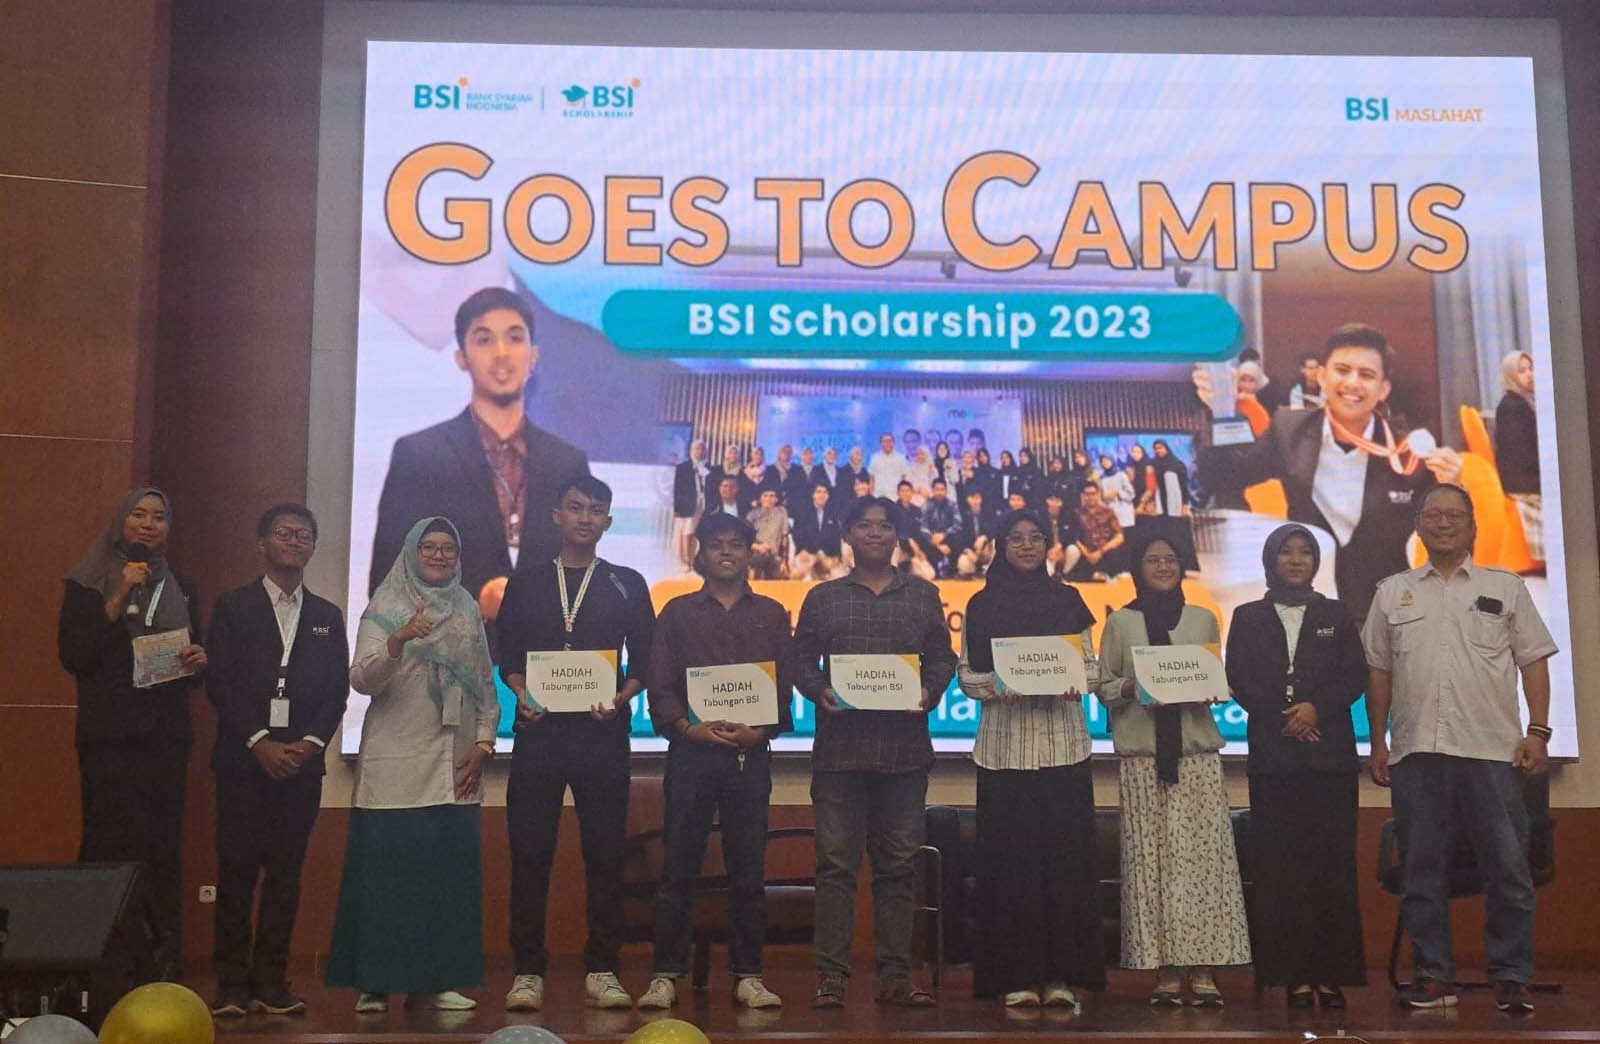 BSI Scholarship